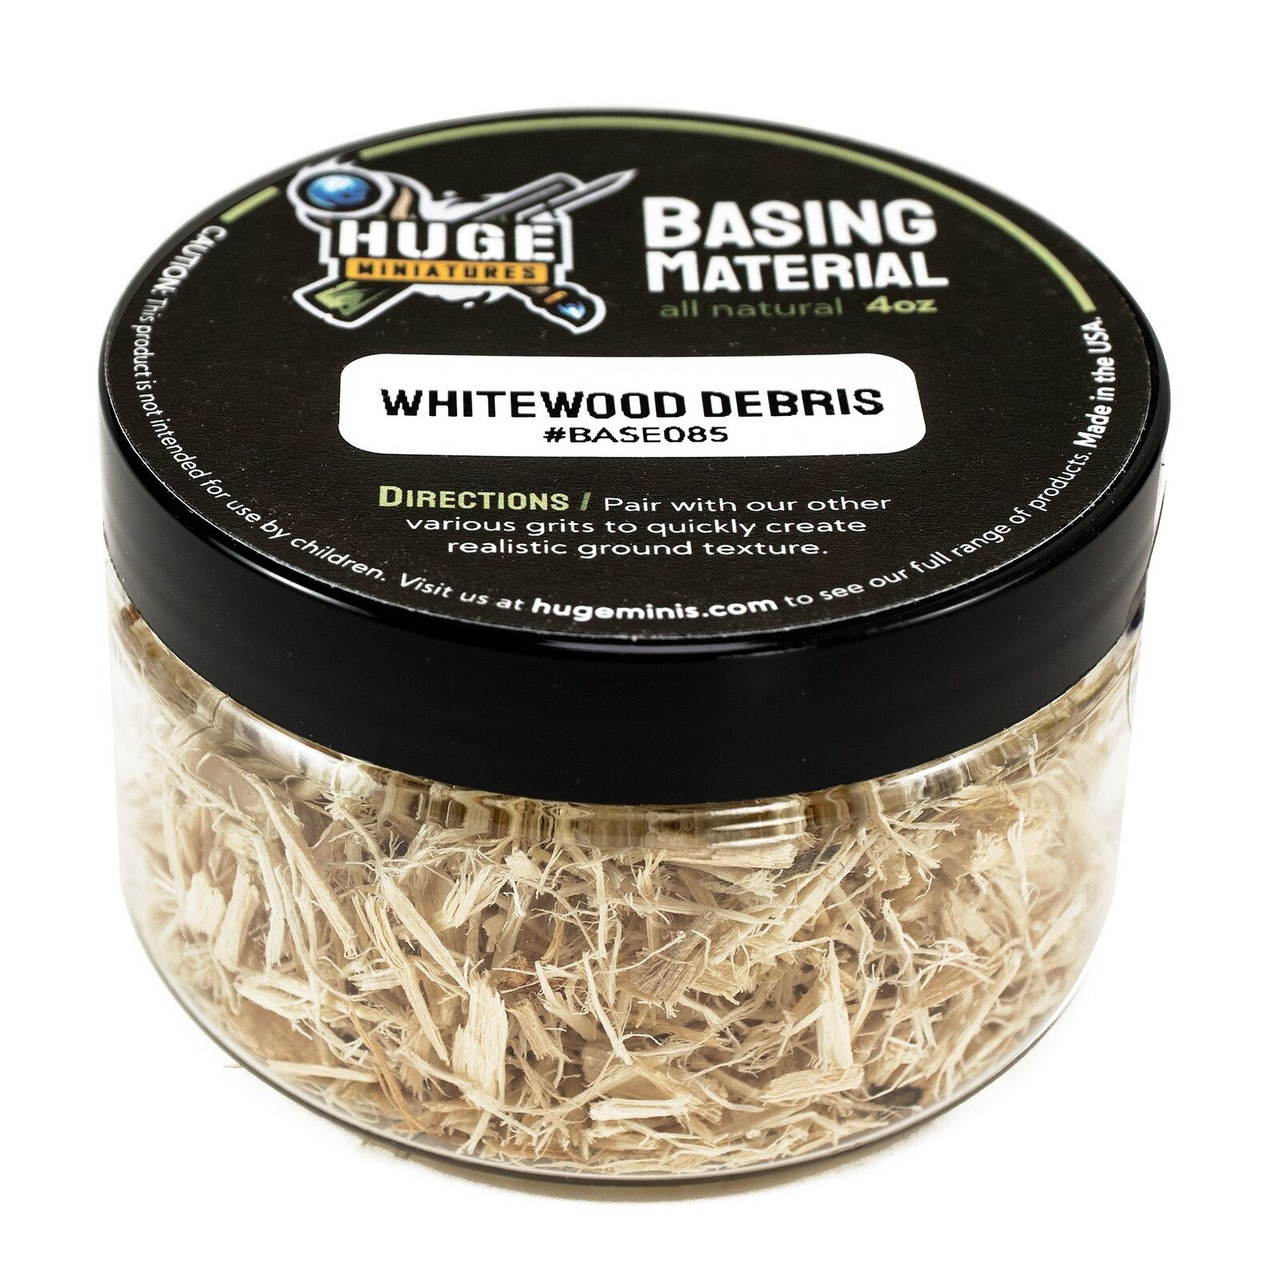 Whitewood Debris - Basing Material -=NEW=-